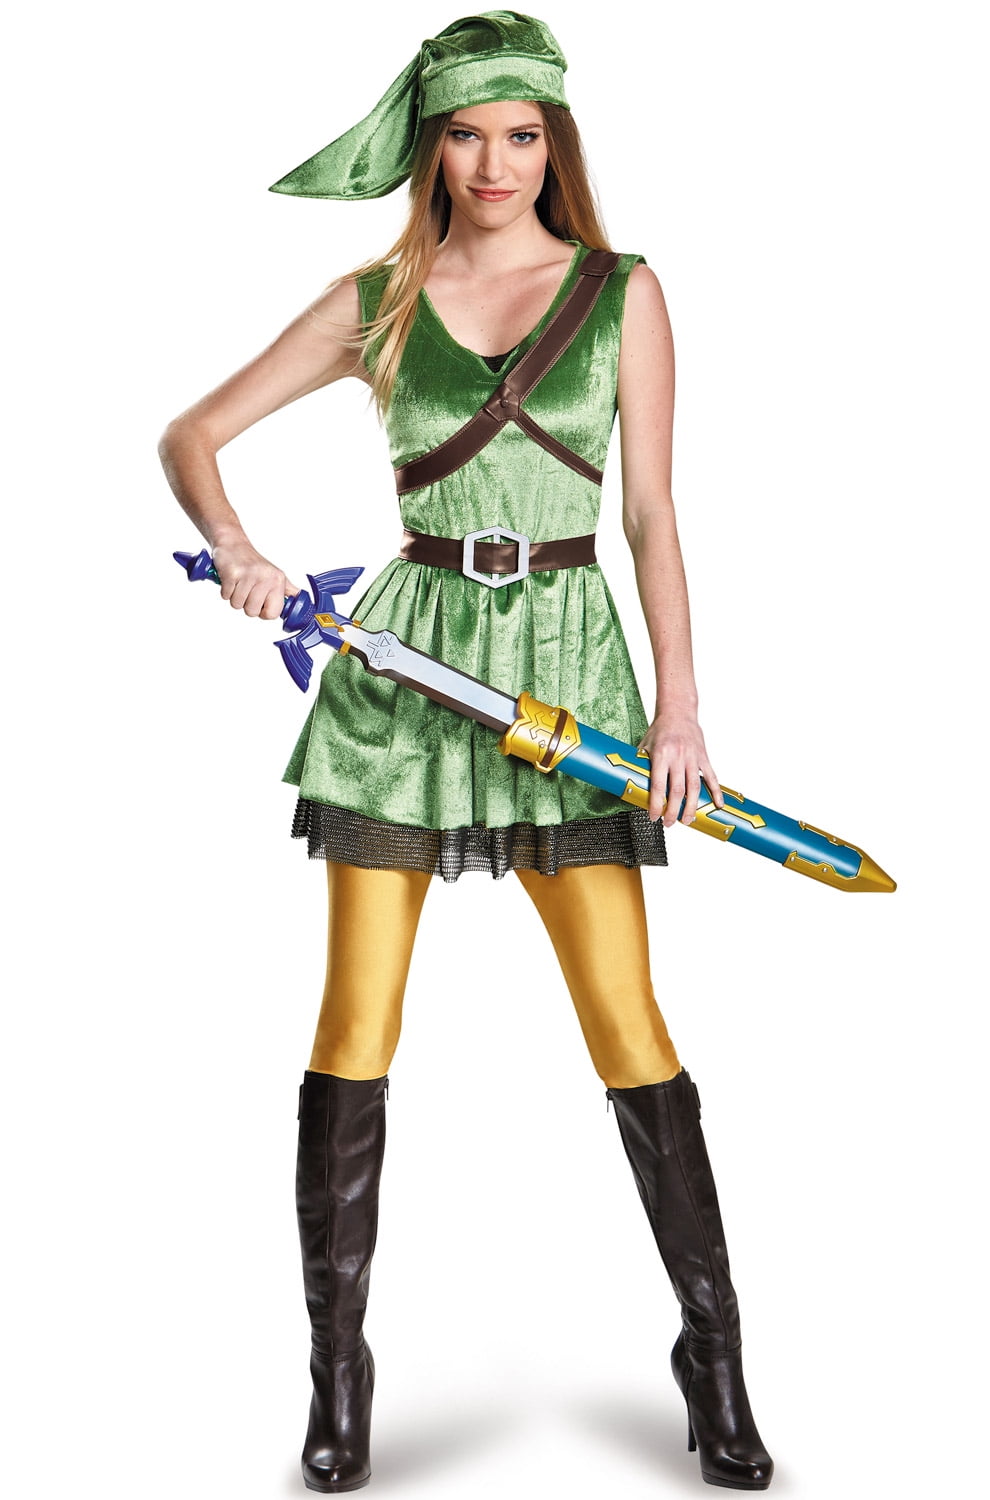 Female Link and Zelda Cosplay